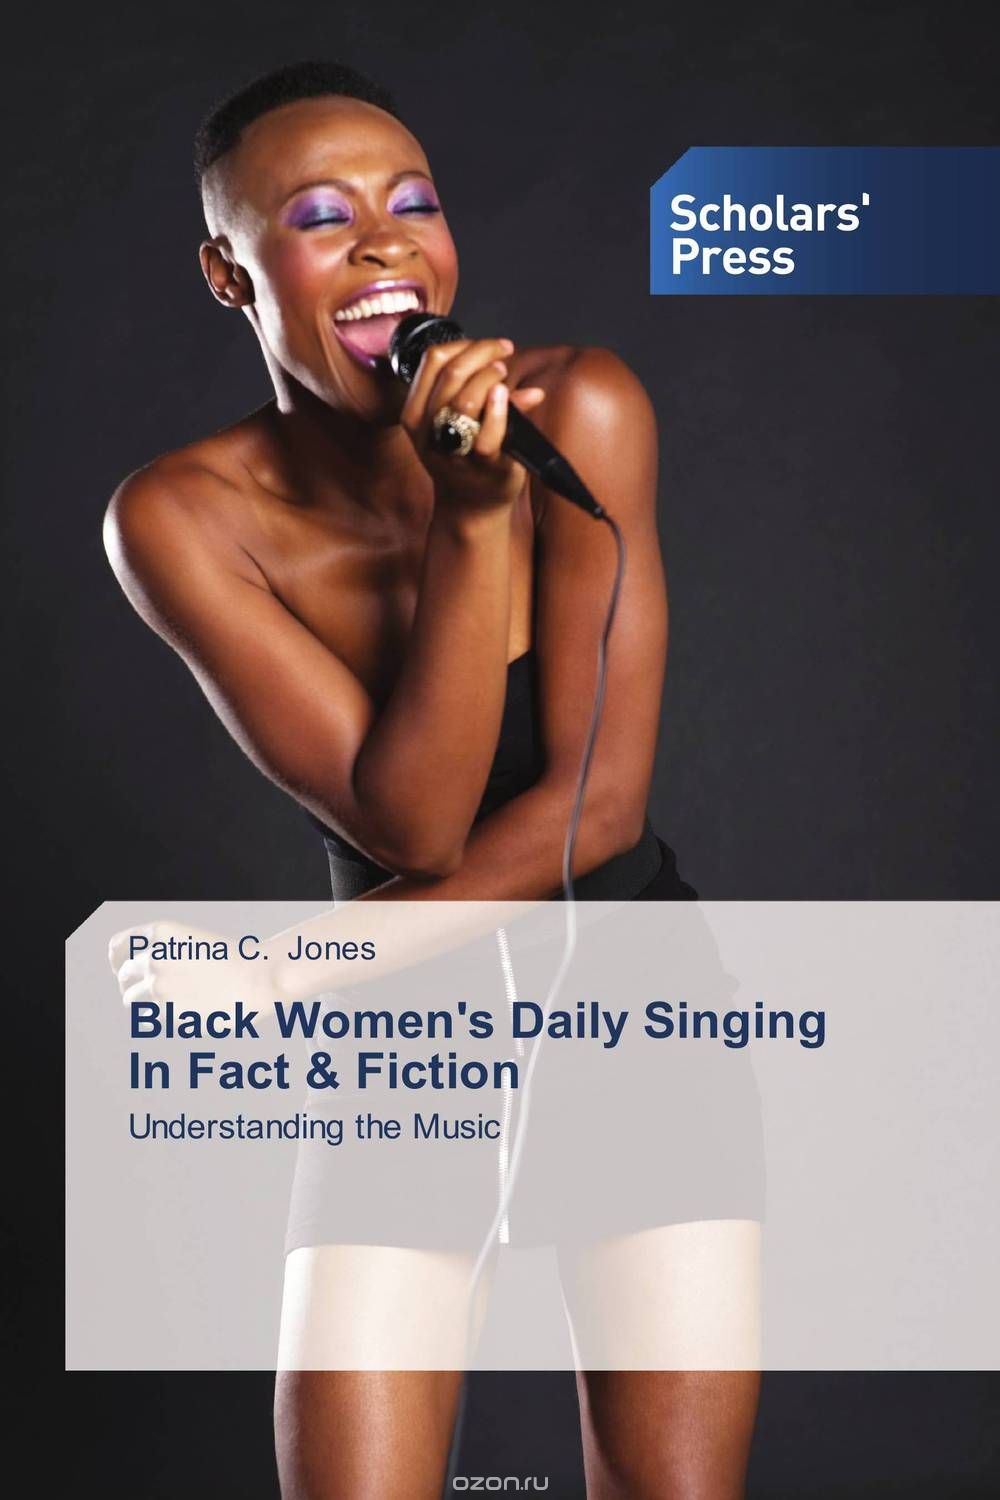 Скачать книгу "Black Women's Daily Singing In Fact & Fiction"